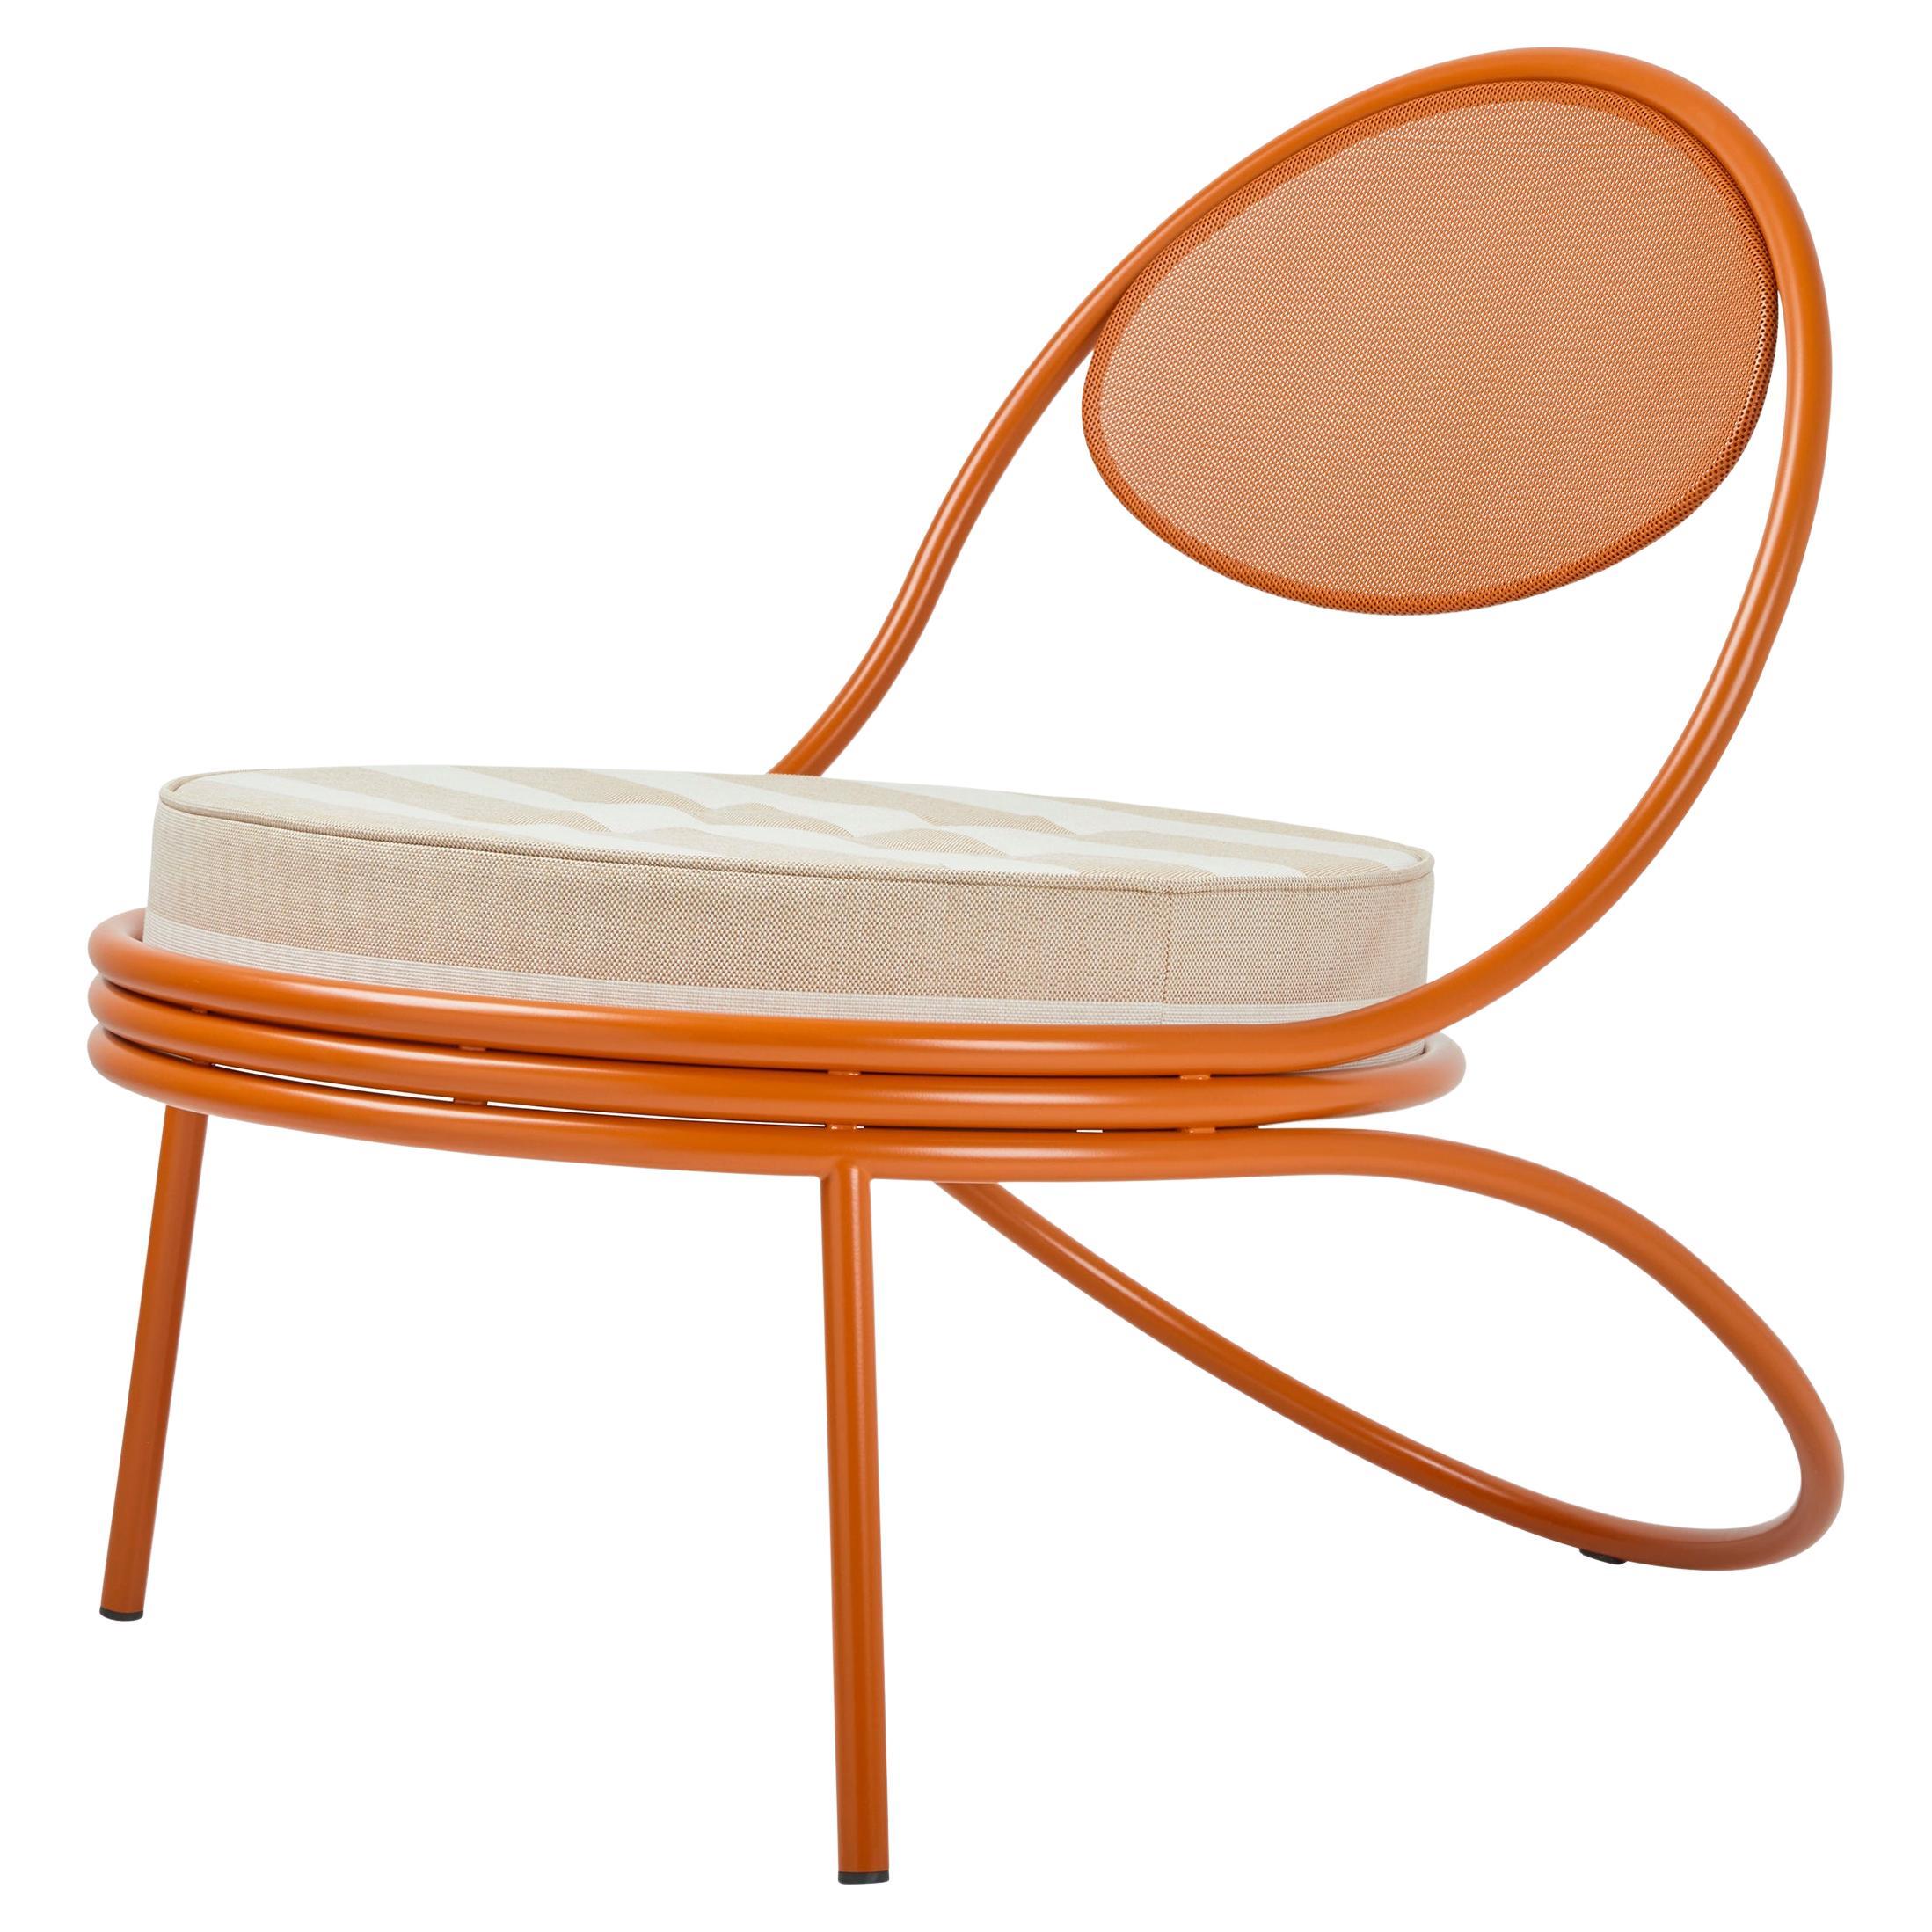 'Copacabana' Indoor Outdoor Lounge Chair by Mathieu Matégot in Leslie Fabric For Sale